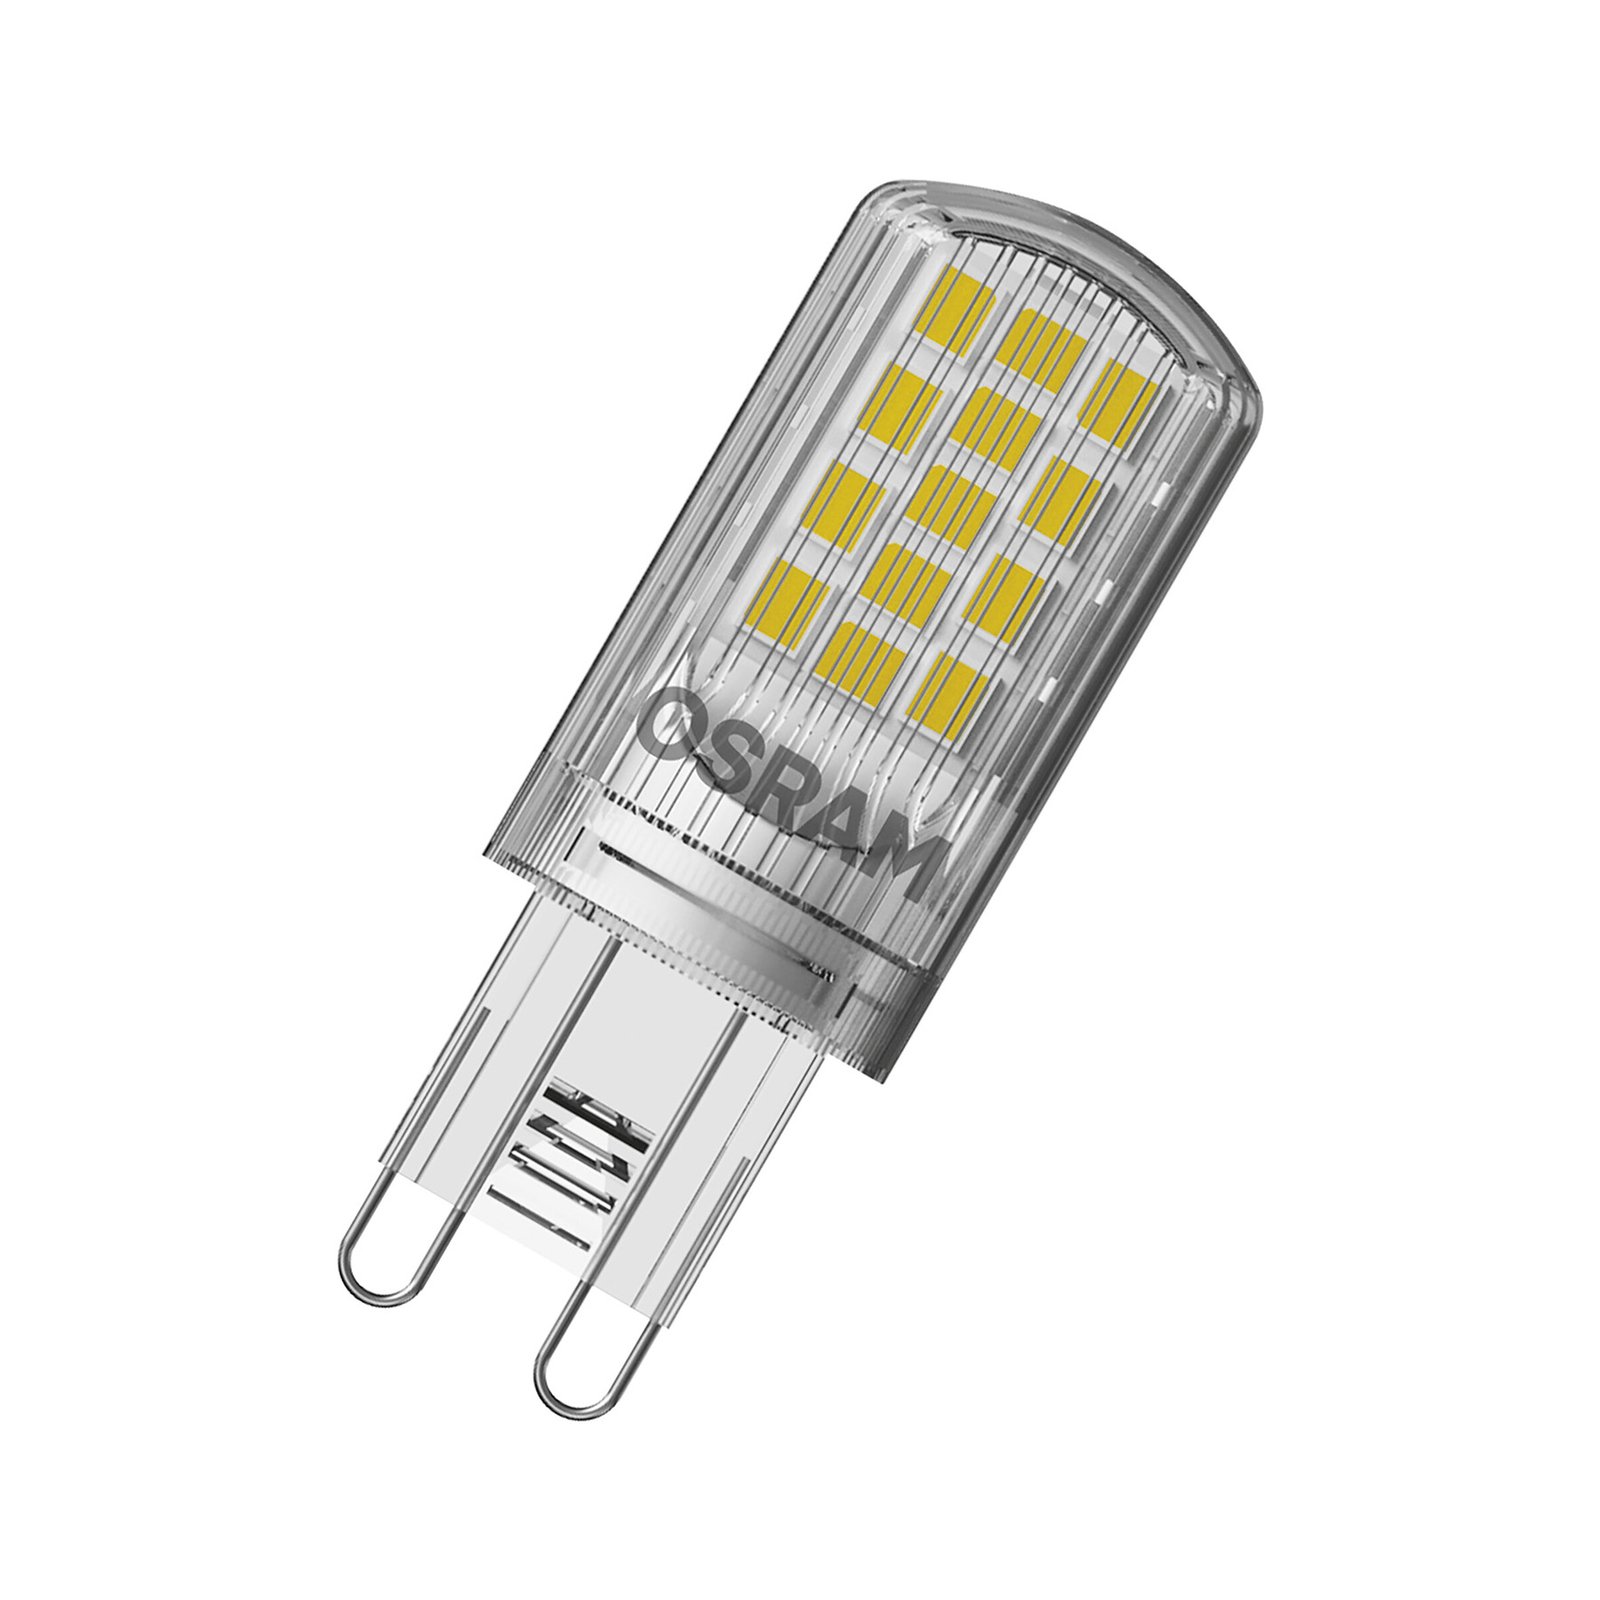 OSRAM Base PIN LED broche G9 4,2 W 470 lm x5